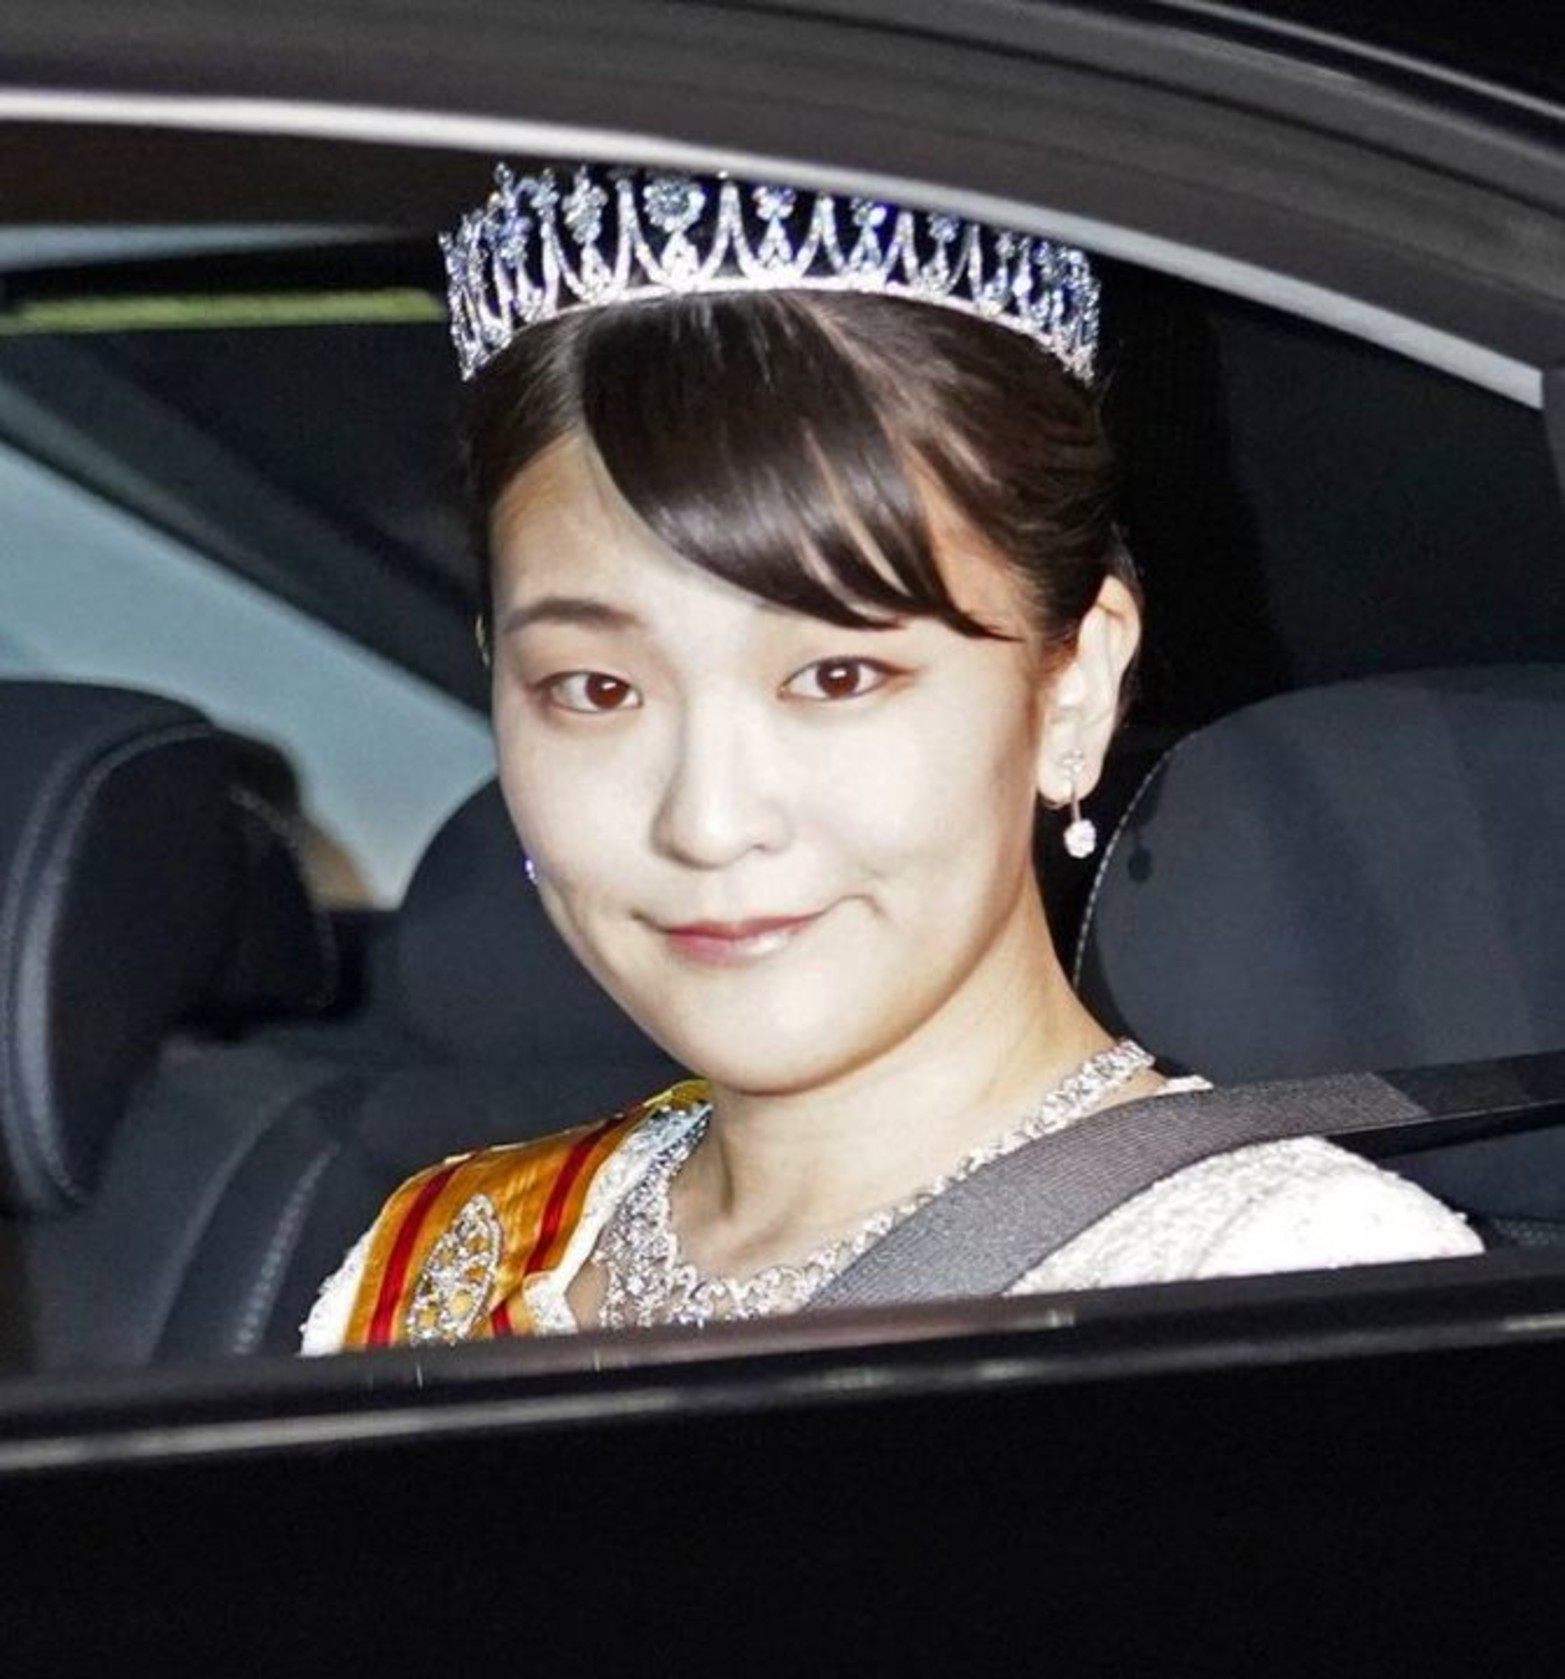 La princesa Mako, sobrina del emperador